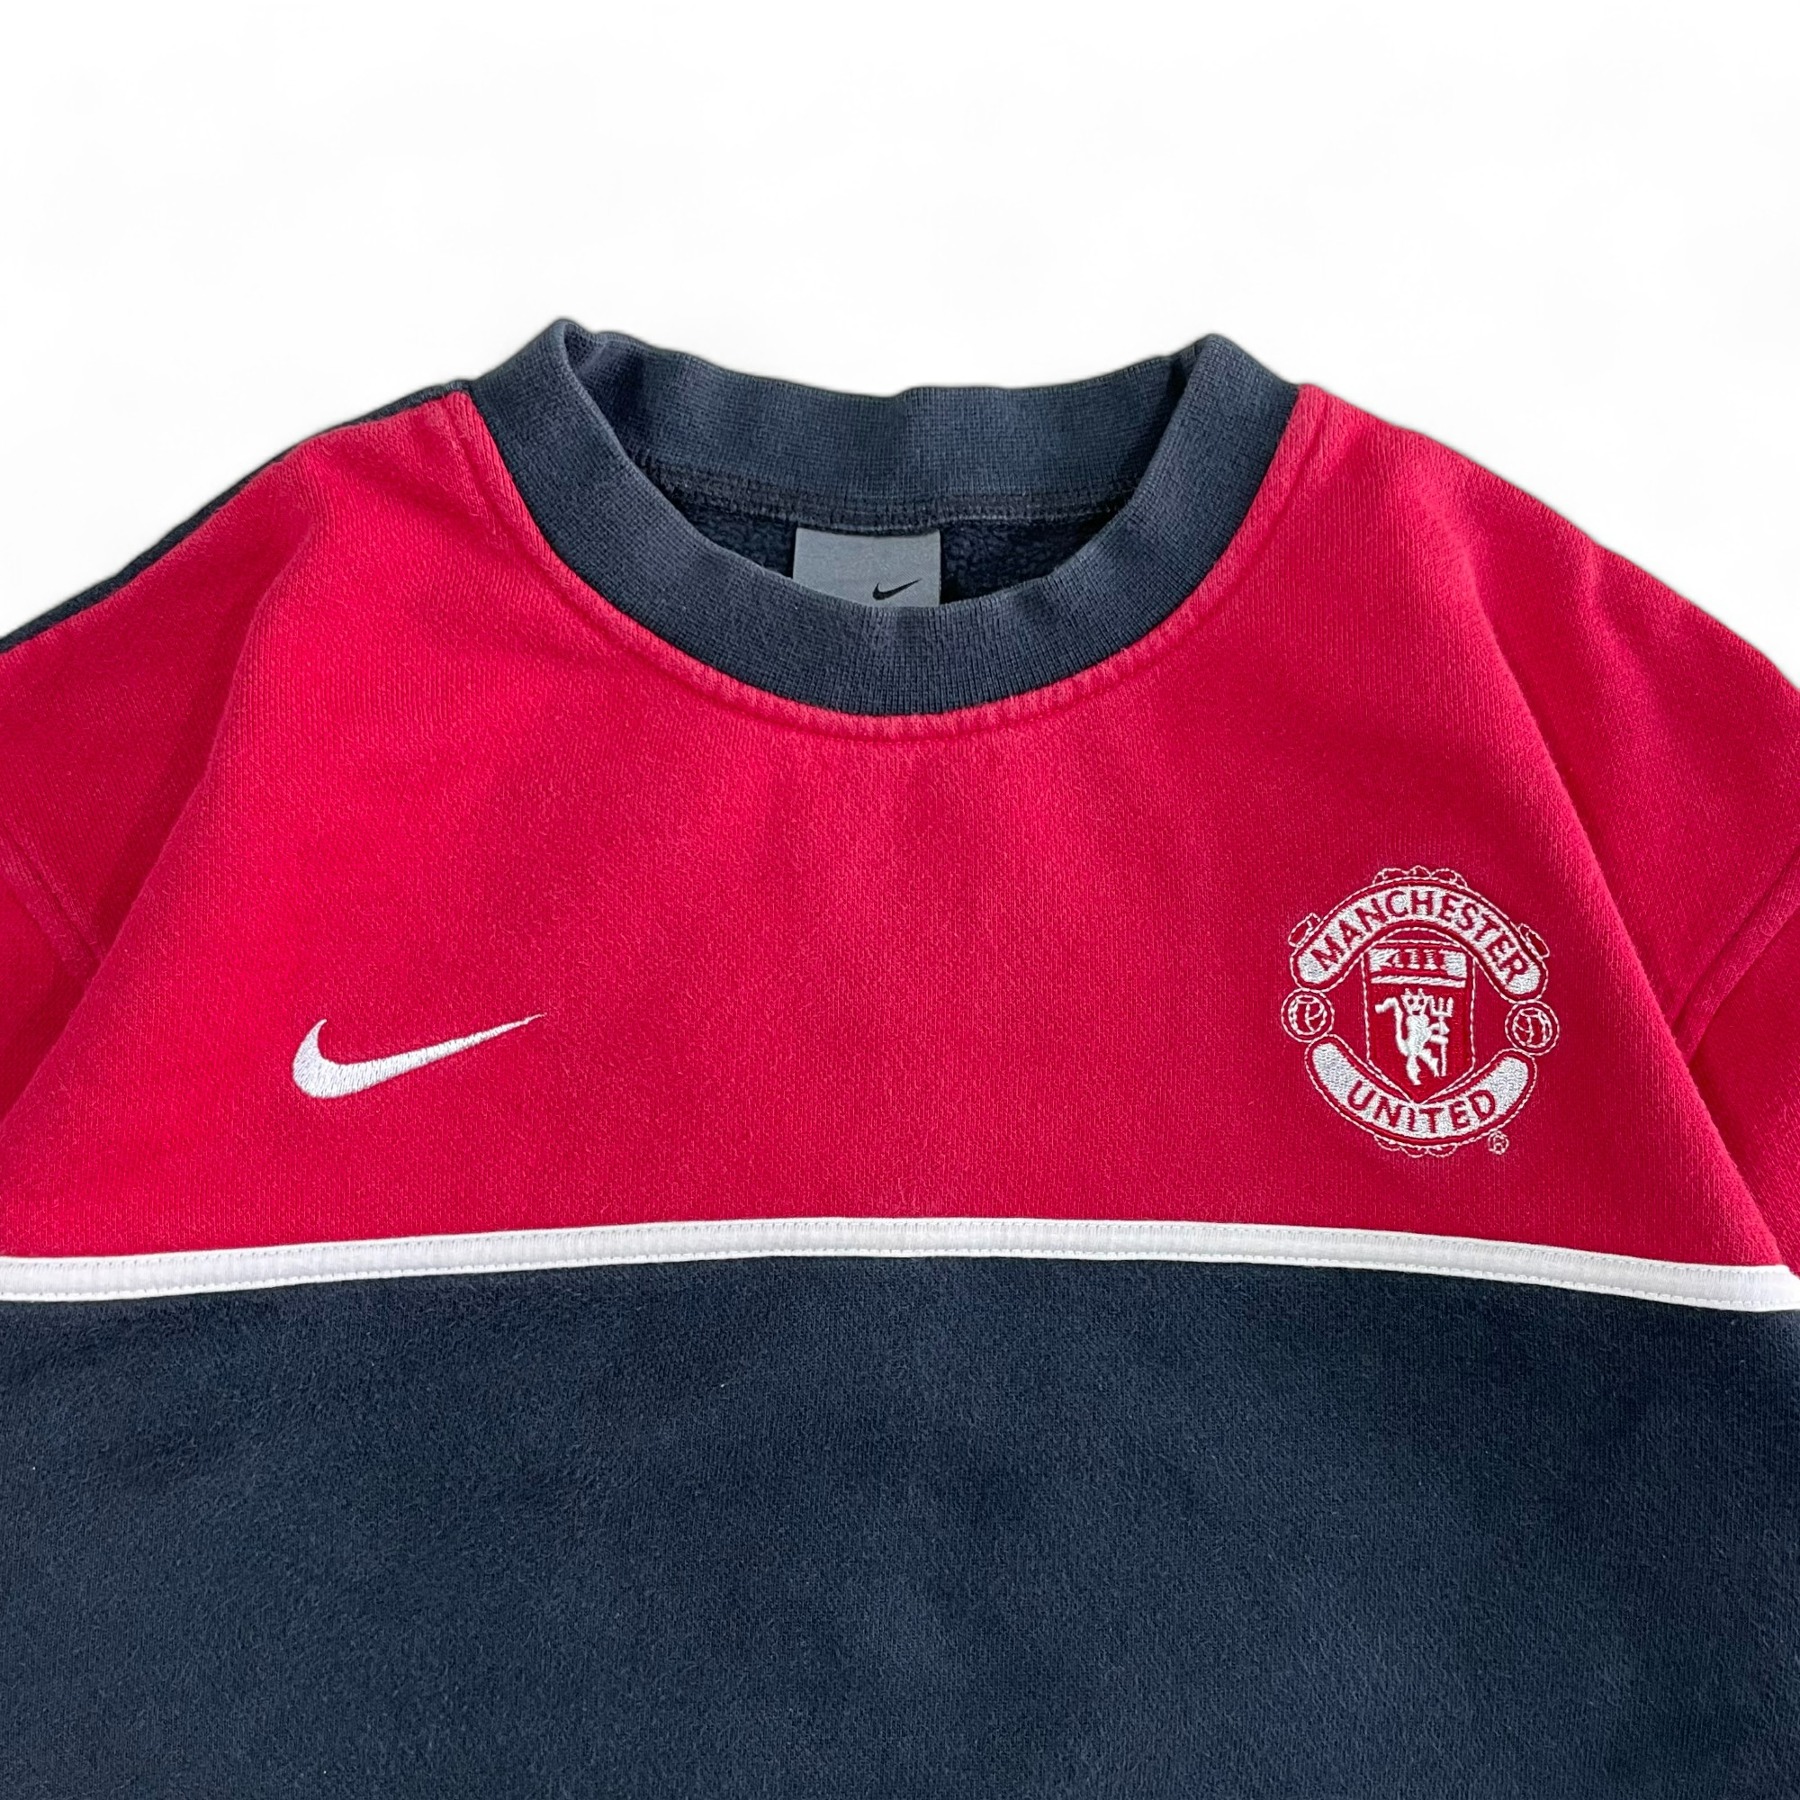 2003 NIKE Manchester United Sweatshirt - M